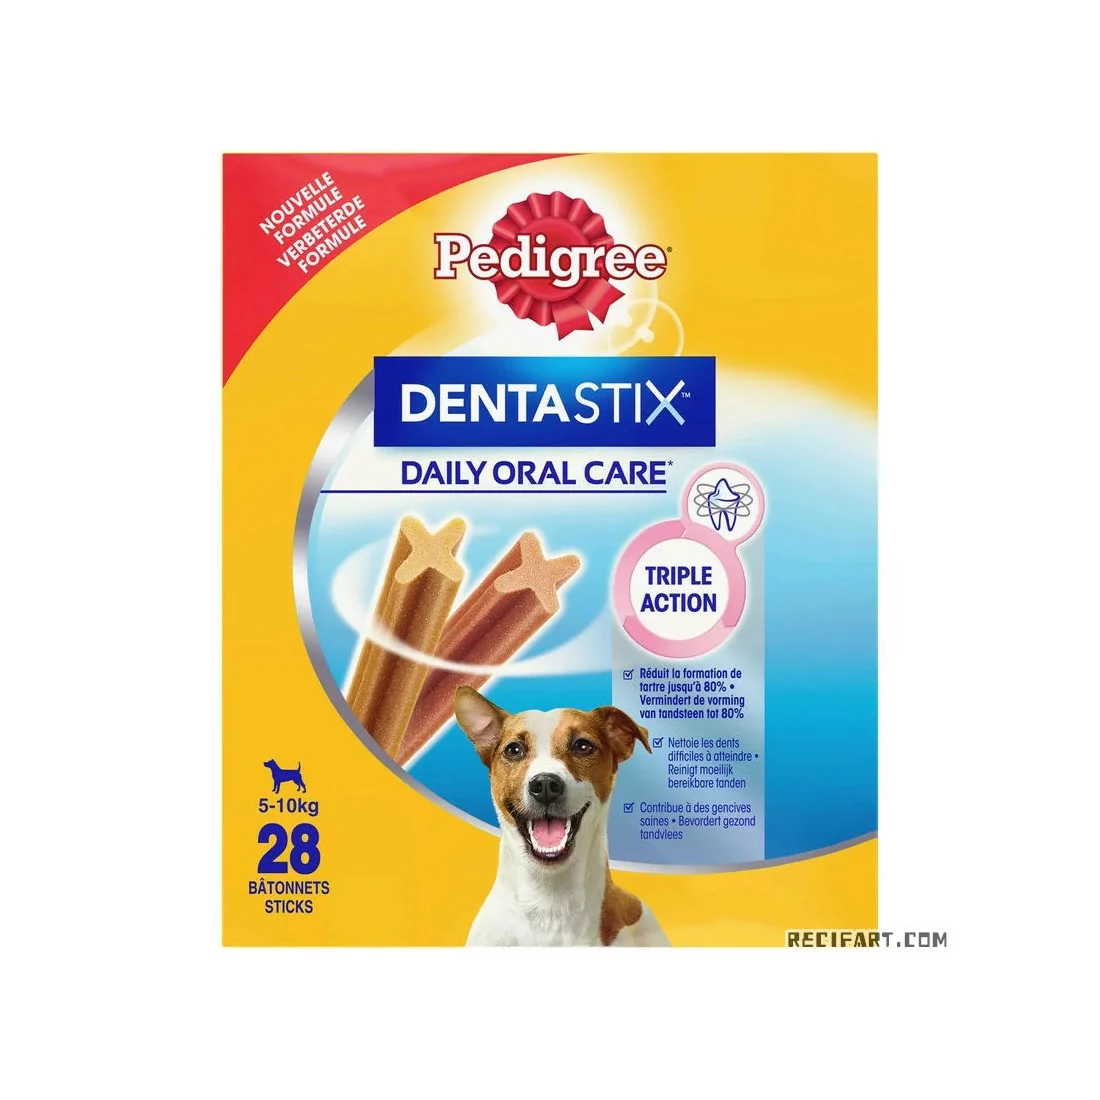 28 DentaStix Daily Oral Care Small Dog Chew Sticks